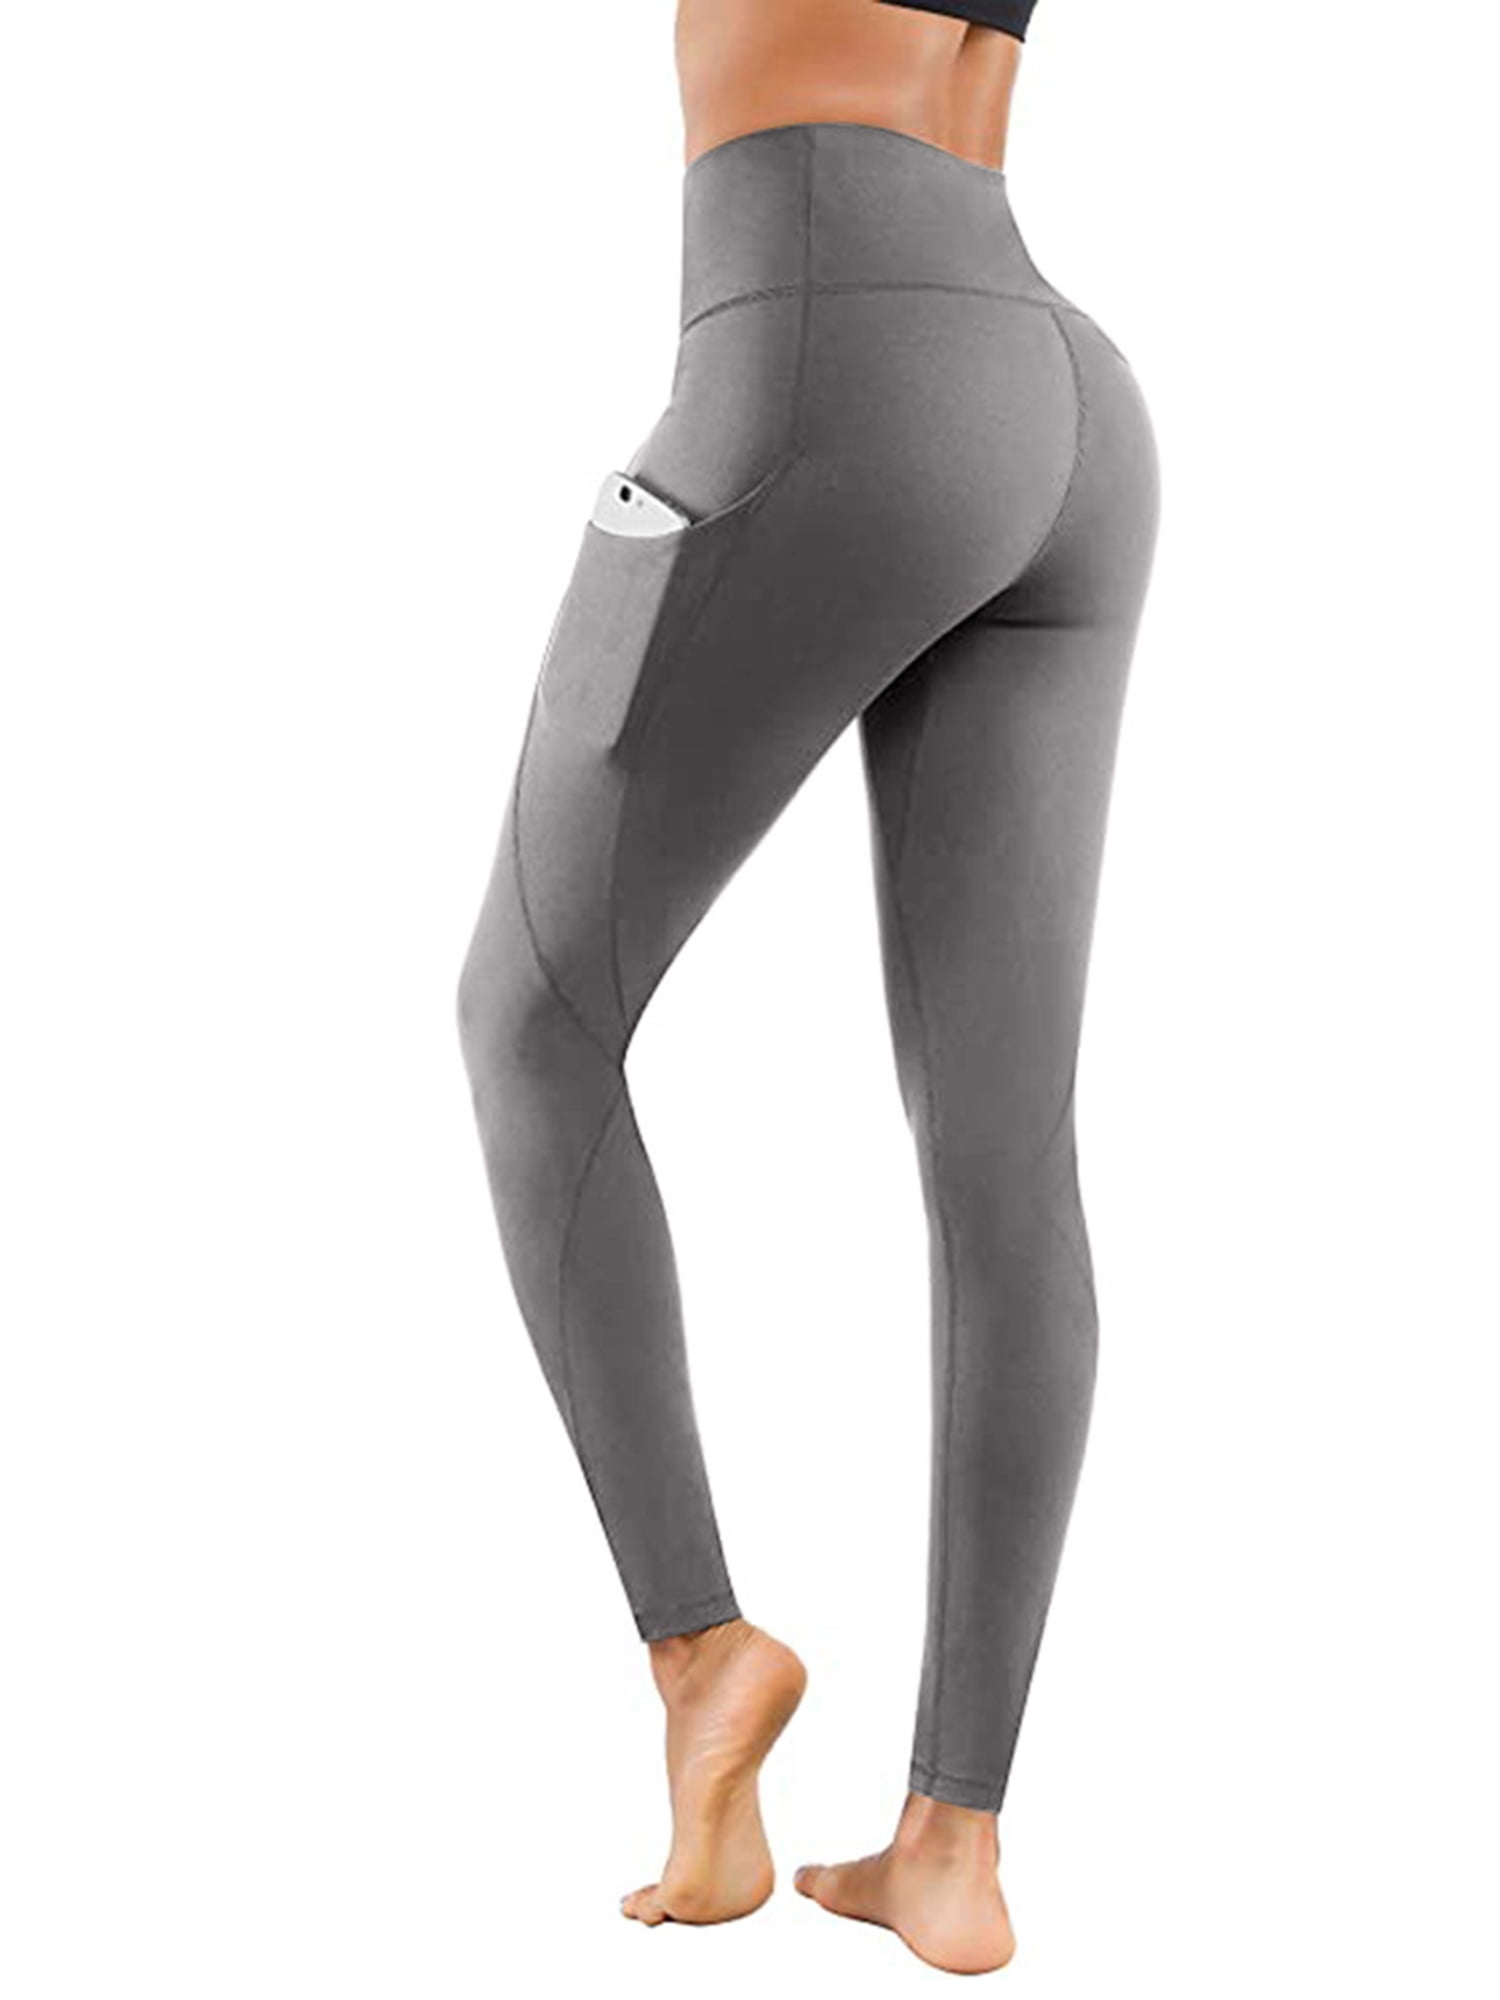 Athletic Tummy Control Leggings High Waist Pocket Sports Running Gym Yoga Pants Yoga Pants Women Petite 